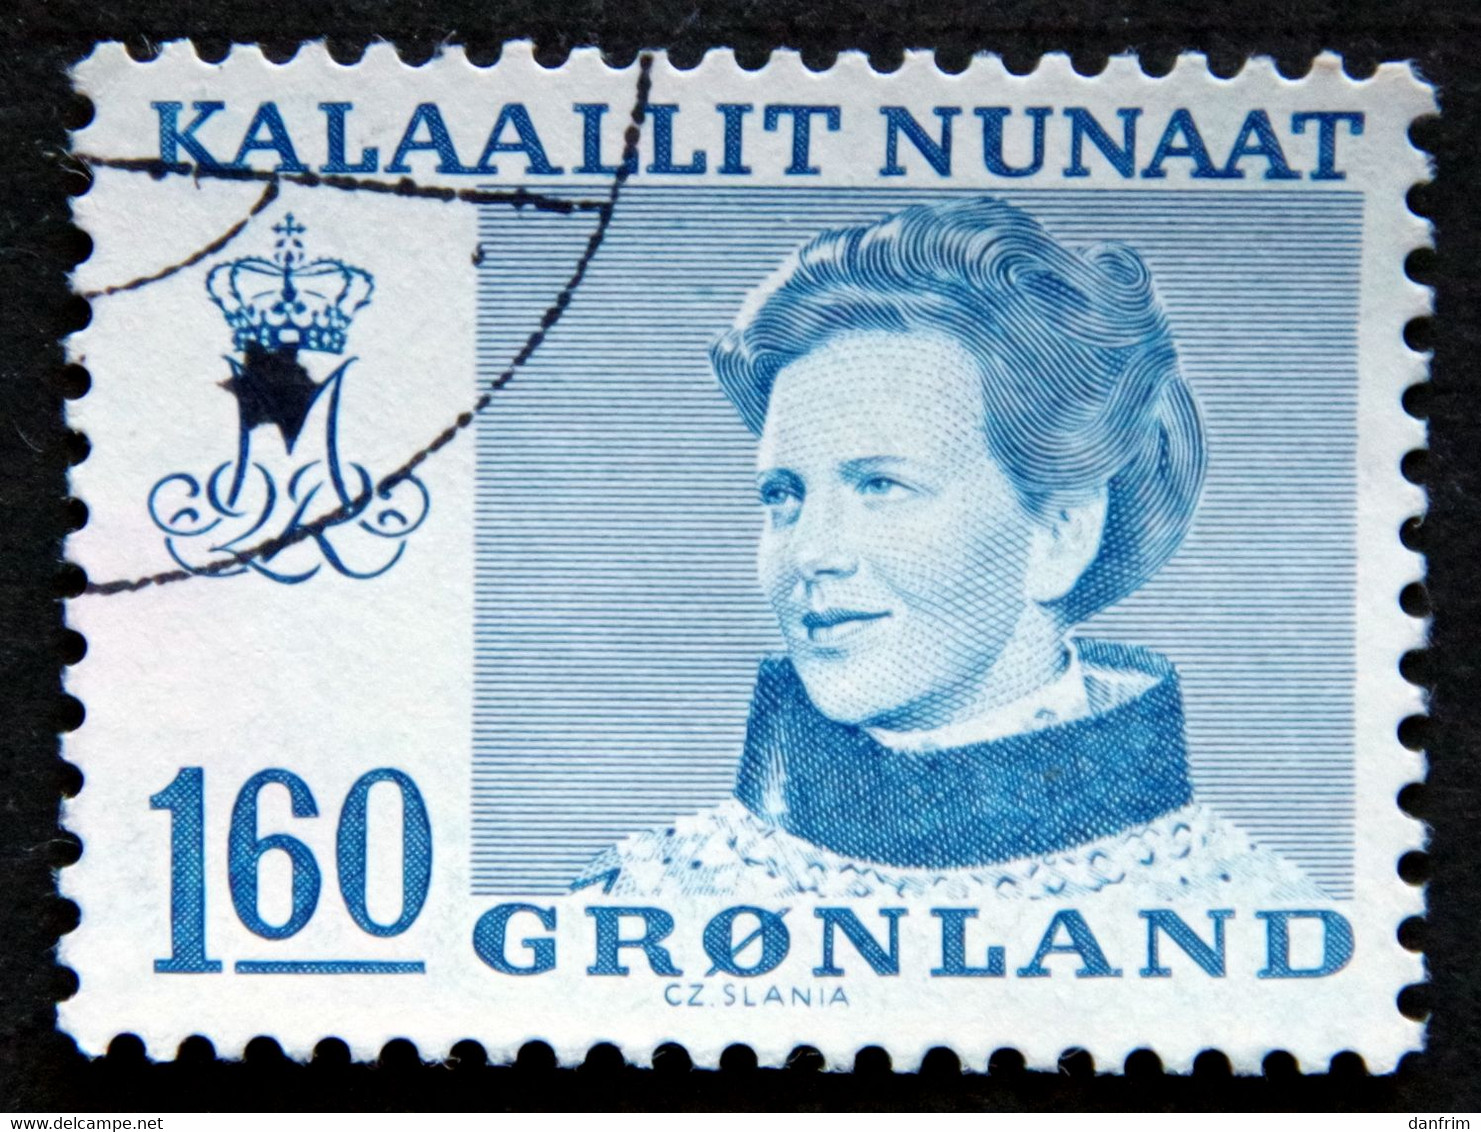 Greenland   1979 Cz.Slania.  MiNr.114 ( Lot H 862 ) - Usati